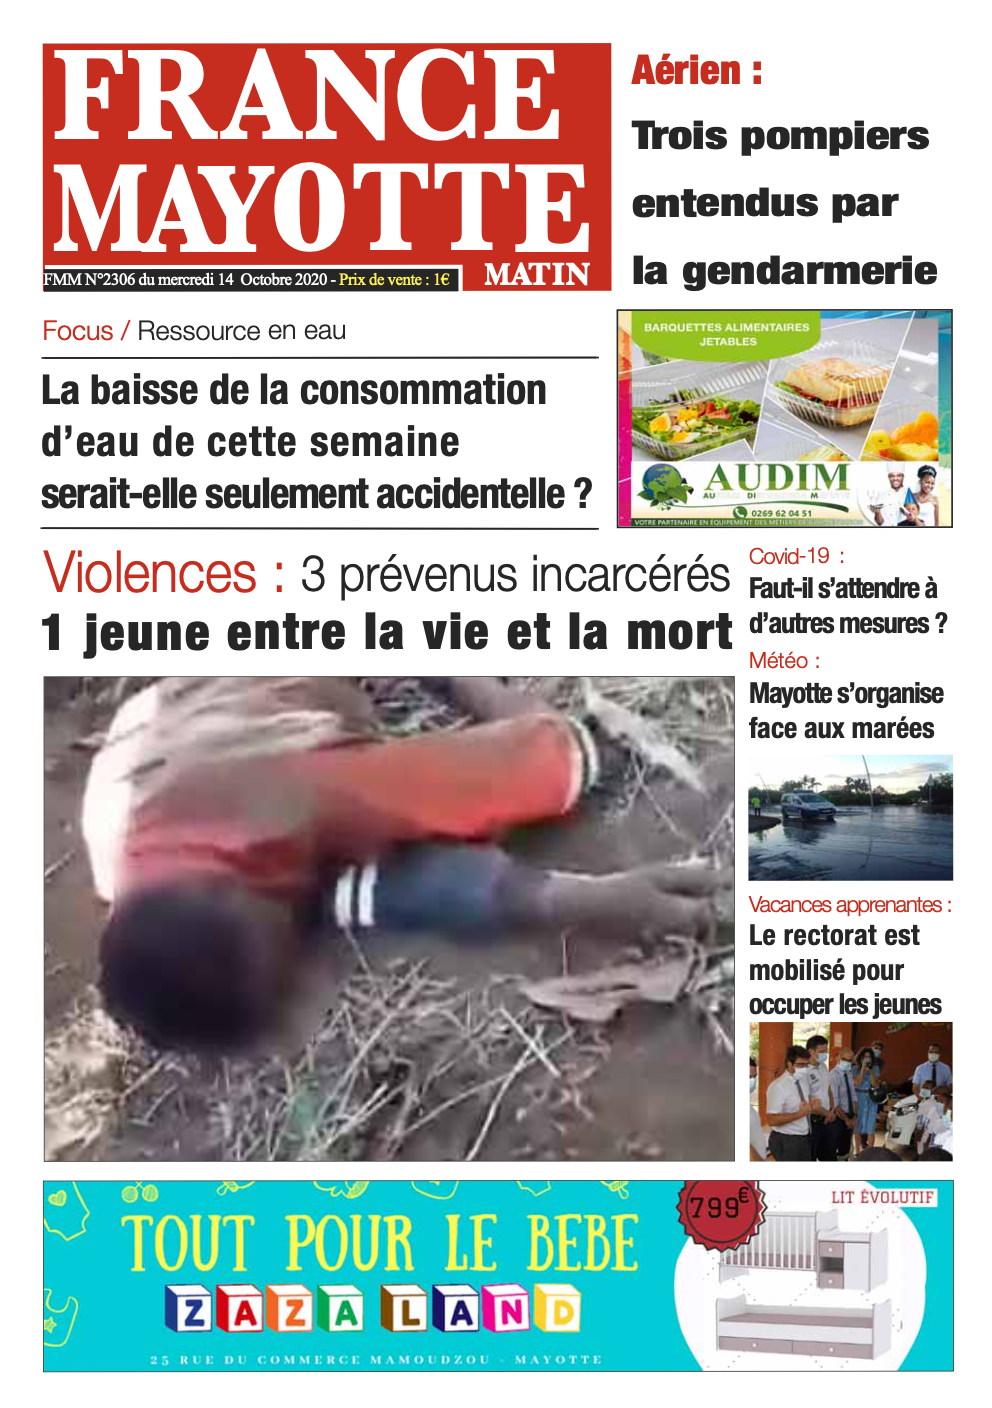 France Mayotte Mercredi 14 mars 2020